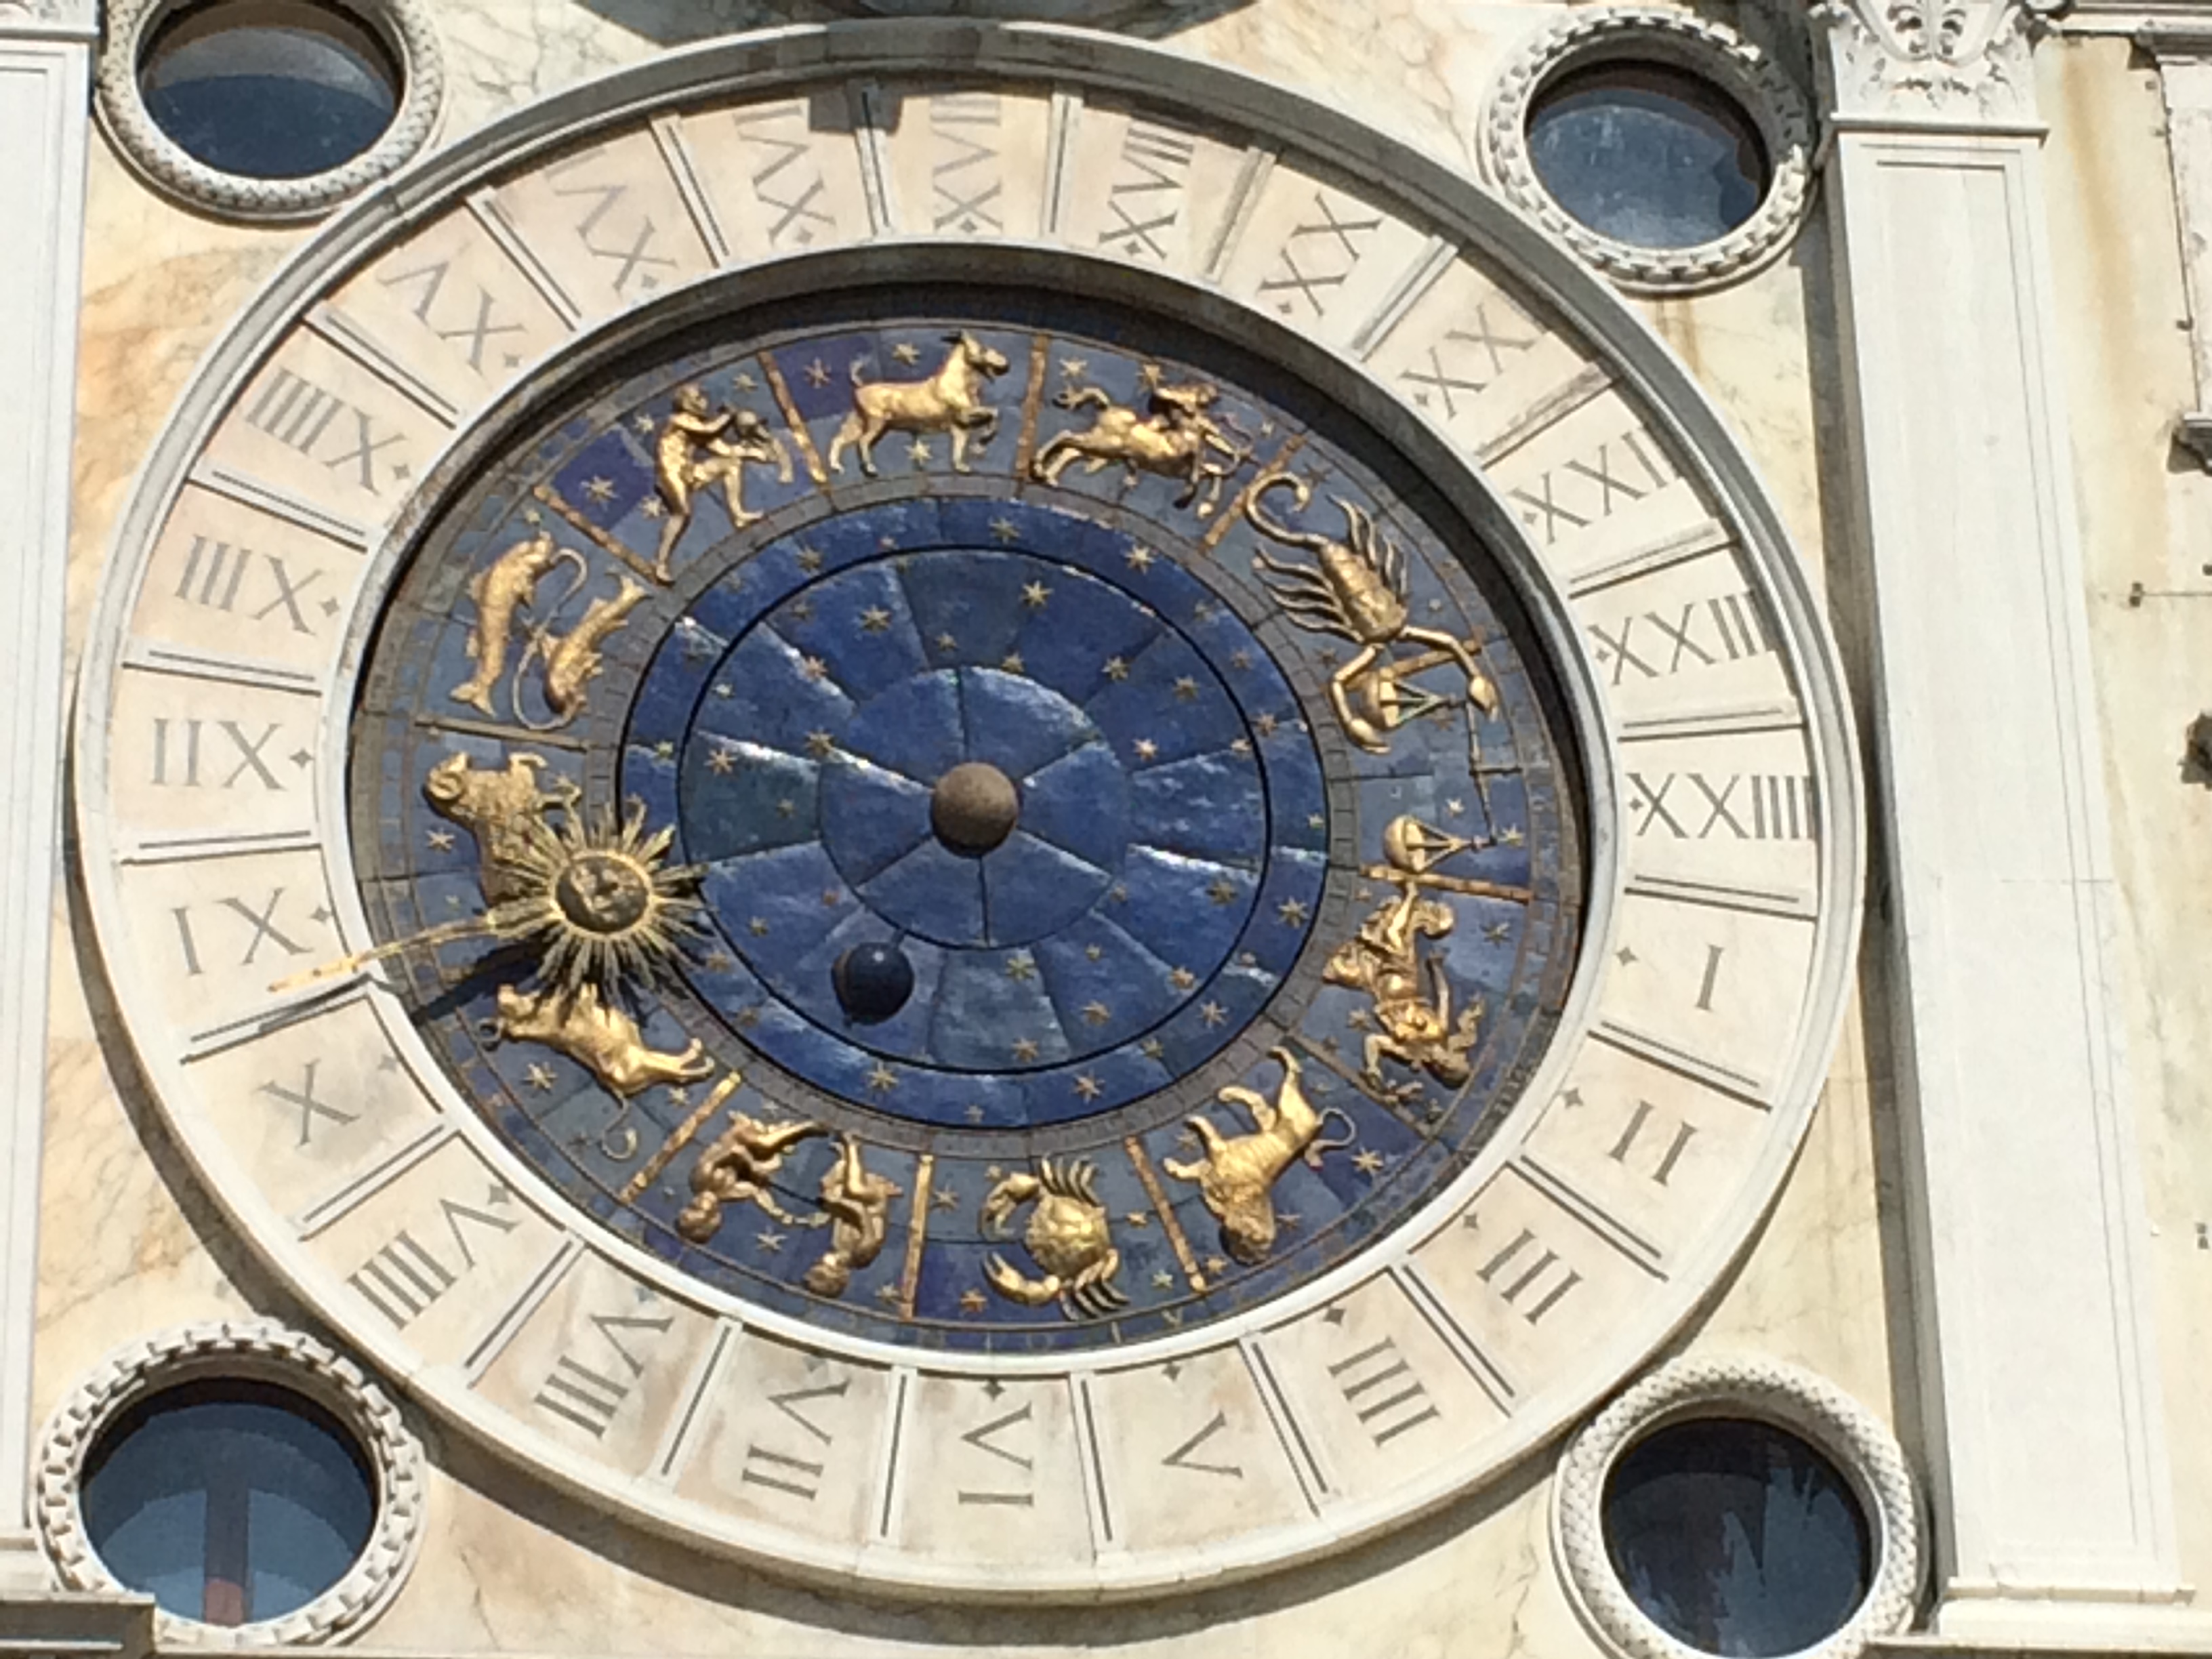 Conhecendo Veneza, o relógio que marca as horas, as fases da lua e os signos do zodíaco